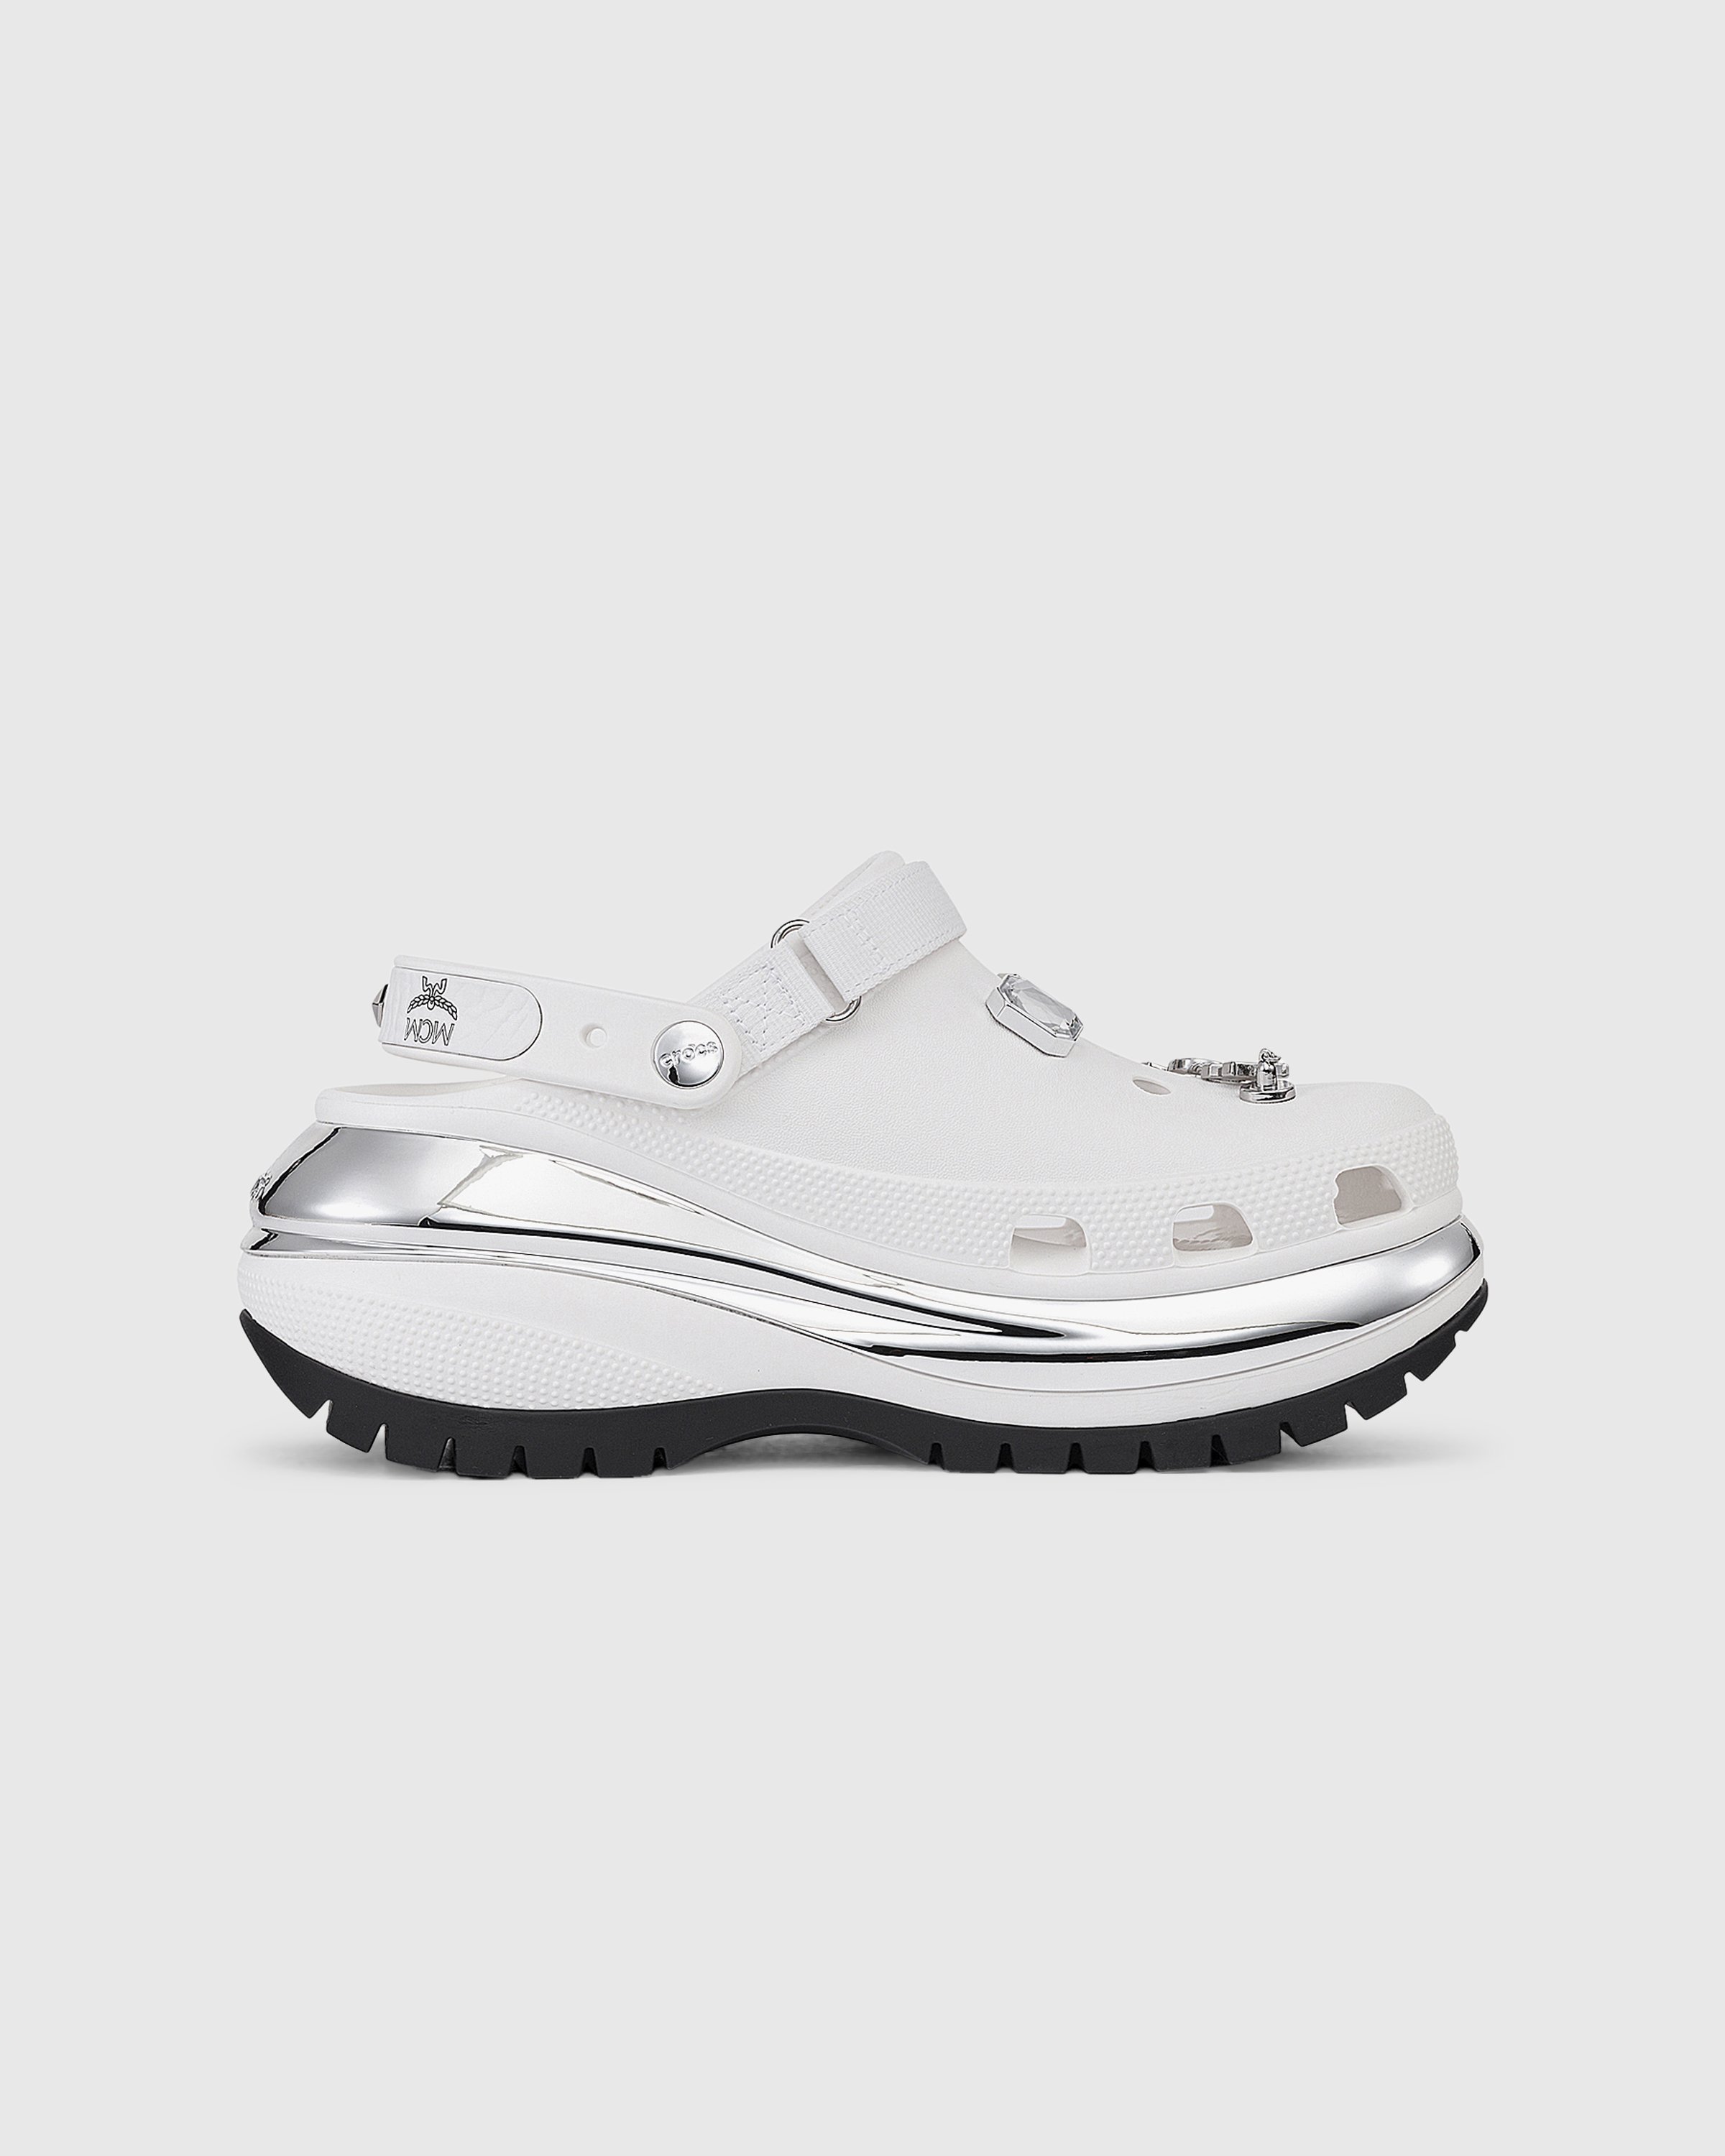 MCM x Crocs - MEGA CRUSH BB 365 White - Footwear - White - Image 1